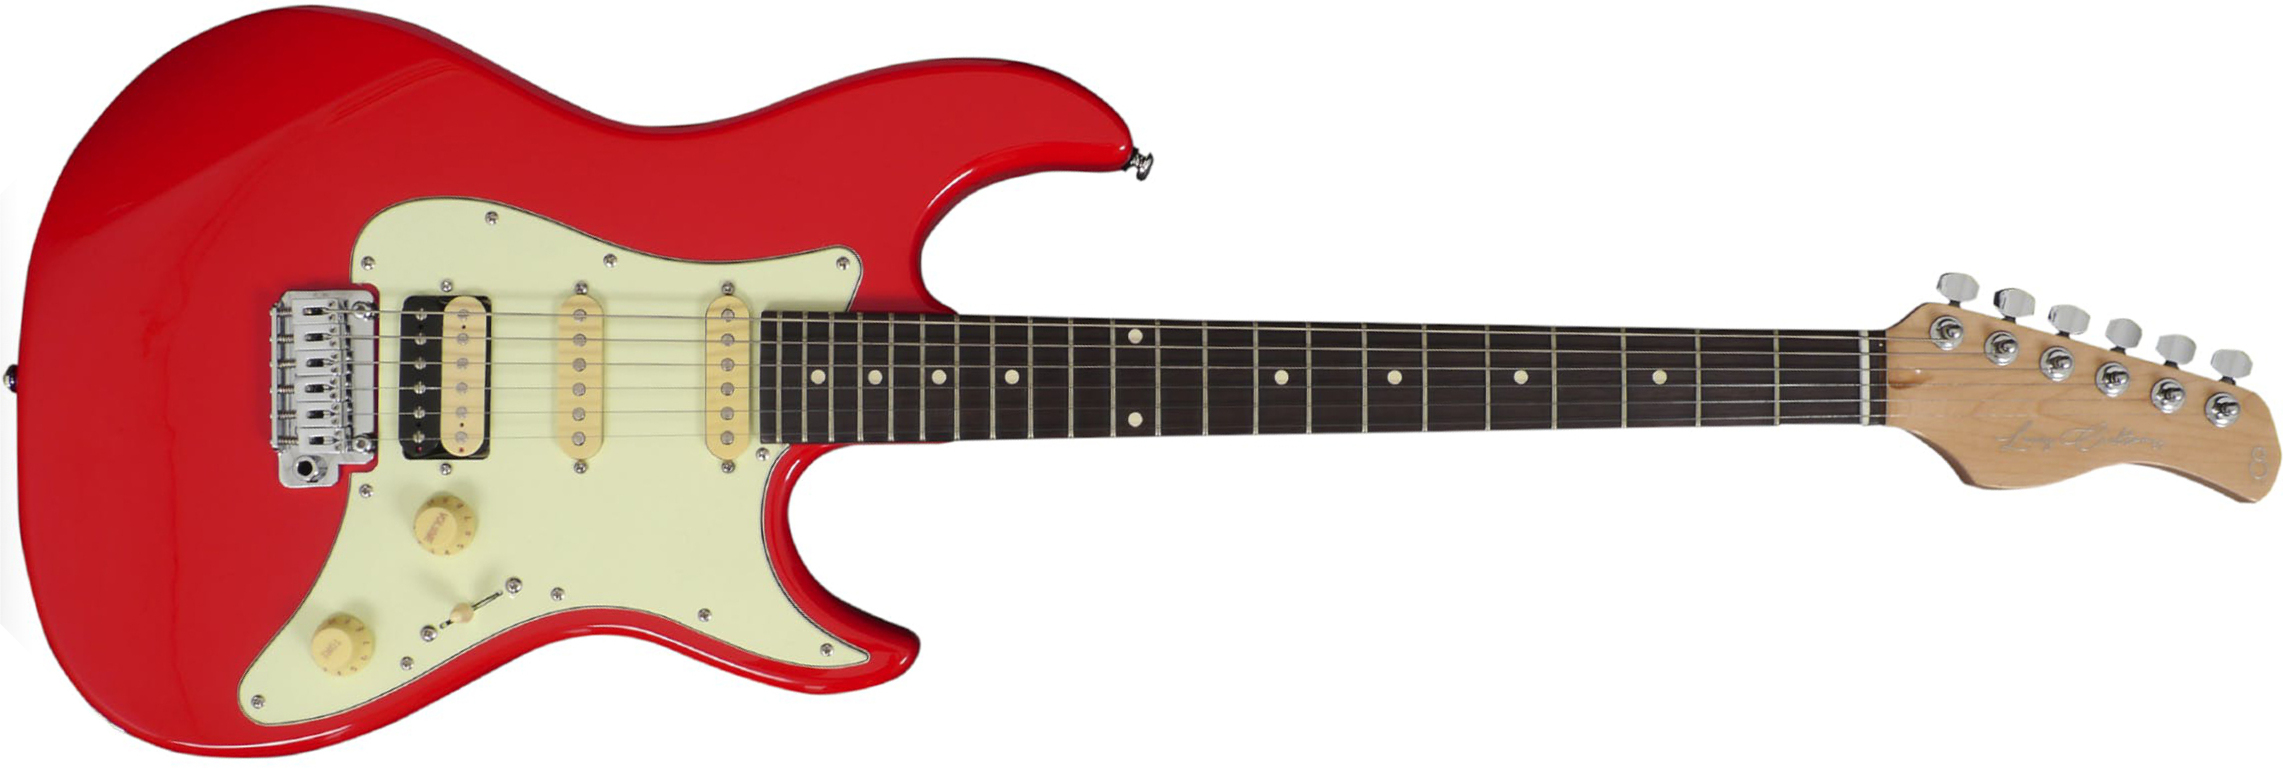 Sire Larry Carlton S3 Signature Hss Trem Rw - Dakota Red - Str shape electric guitar - Main picture